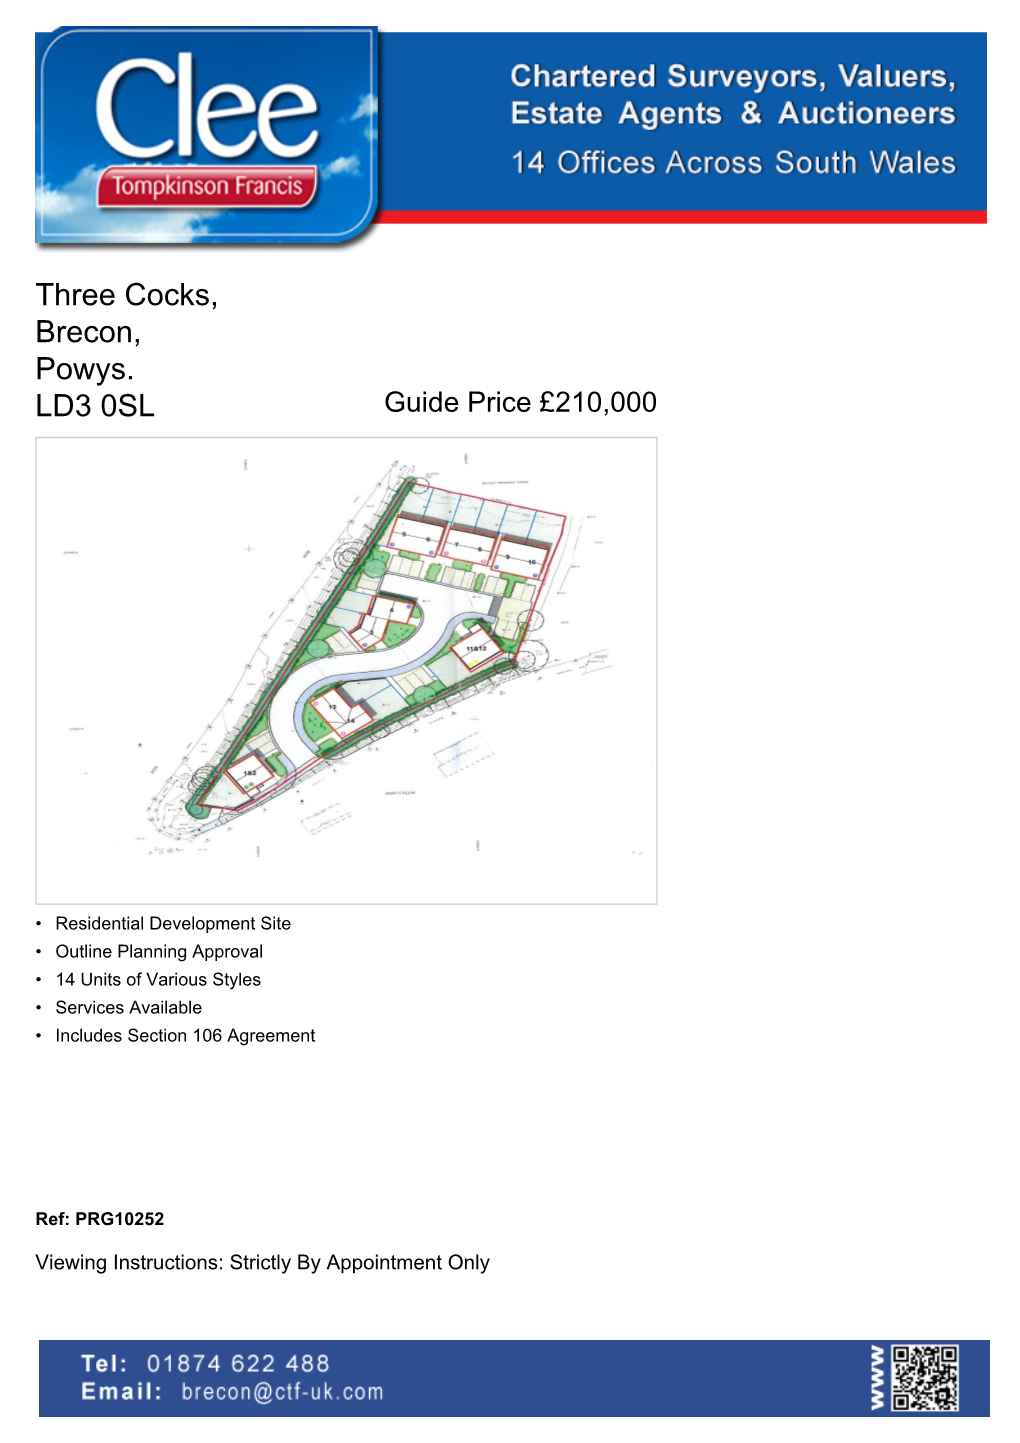 Three Cocks, Brecon, Powys. LD3 0SL Guide Price £210,000